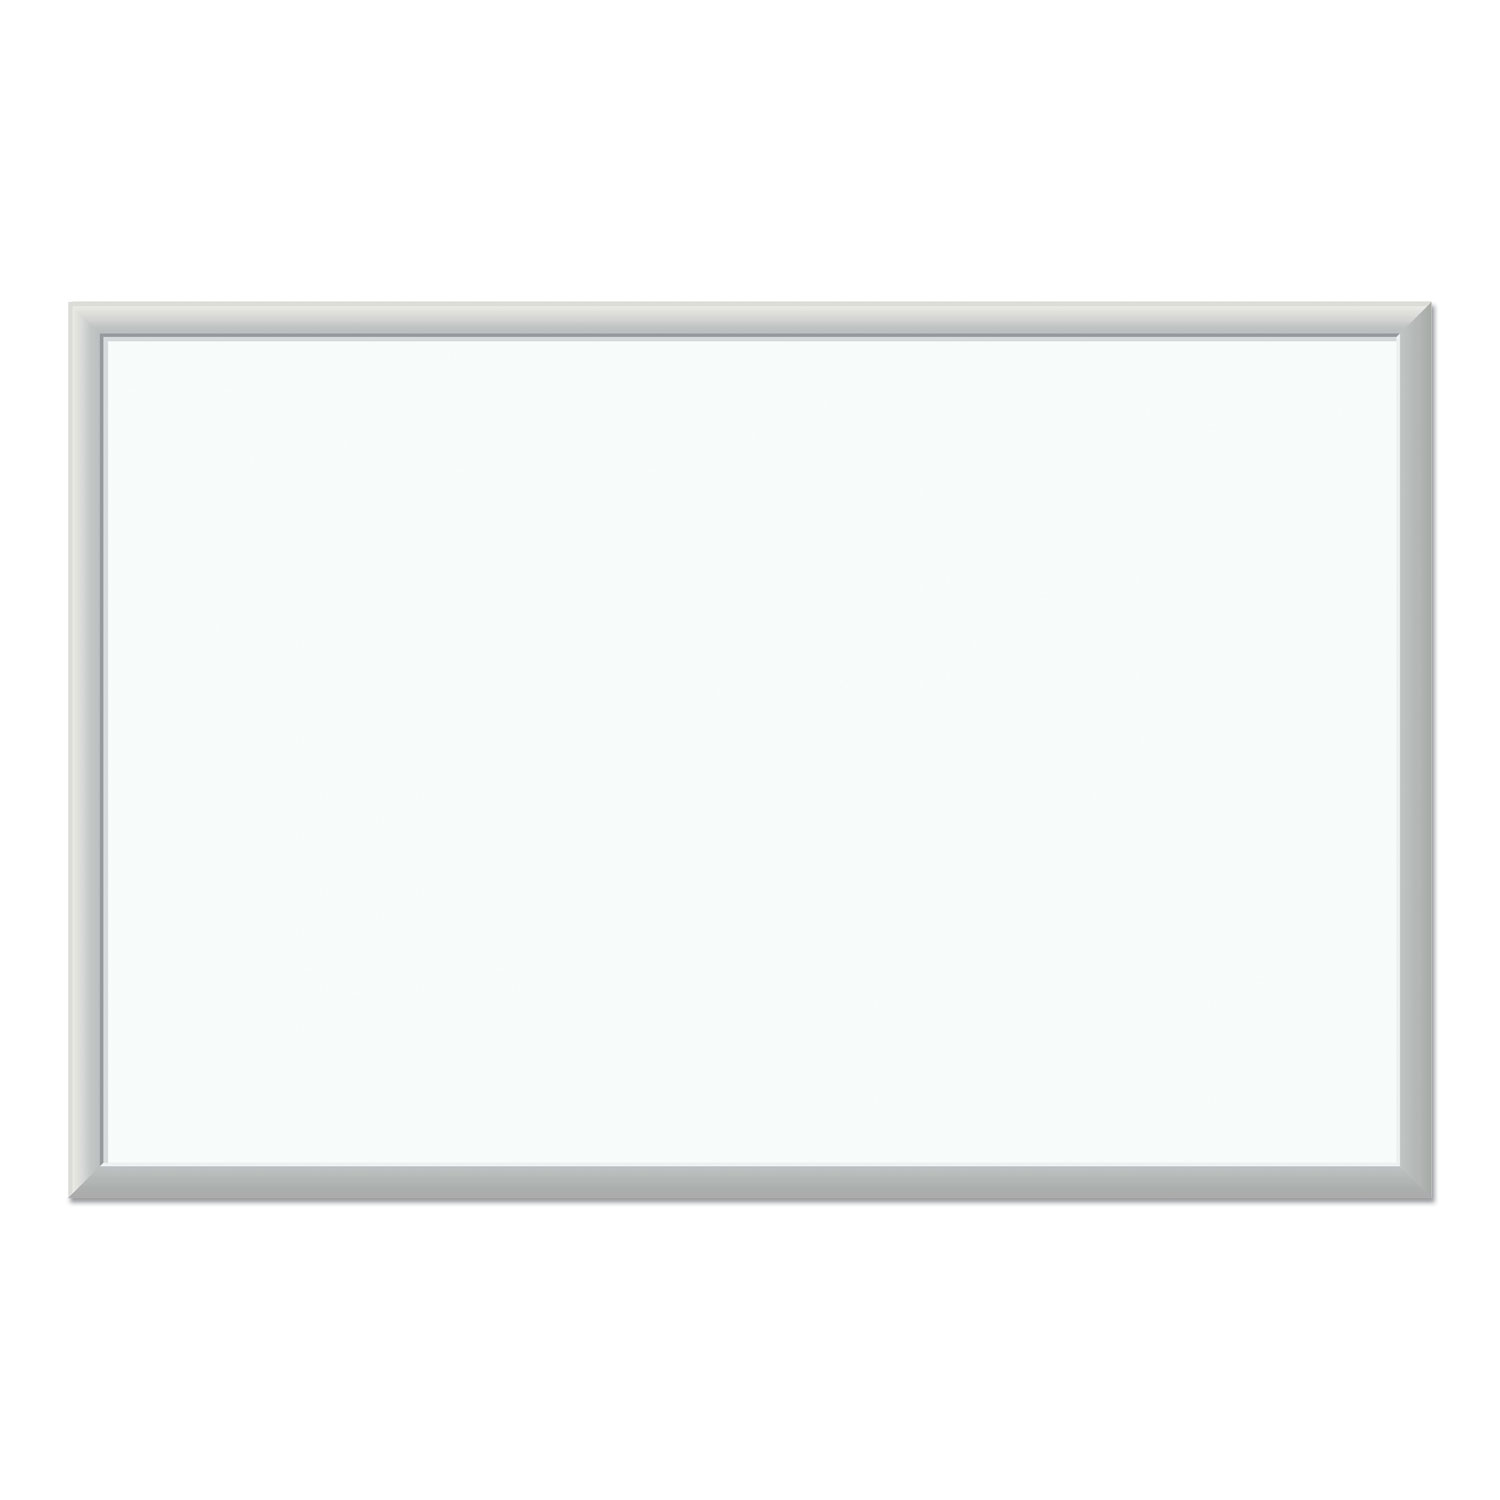 U Brands Melamine Dry Erase Board, 36 x 24, White Surface, Silver Frame